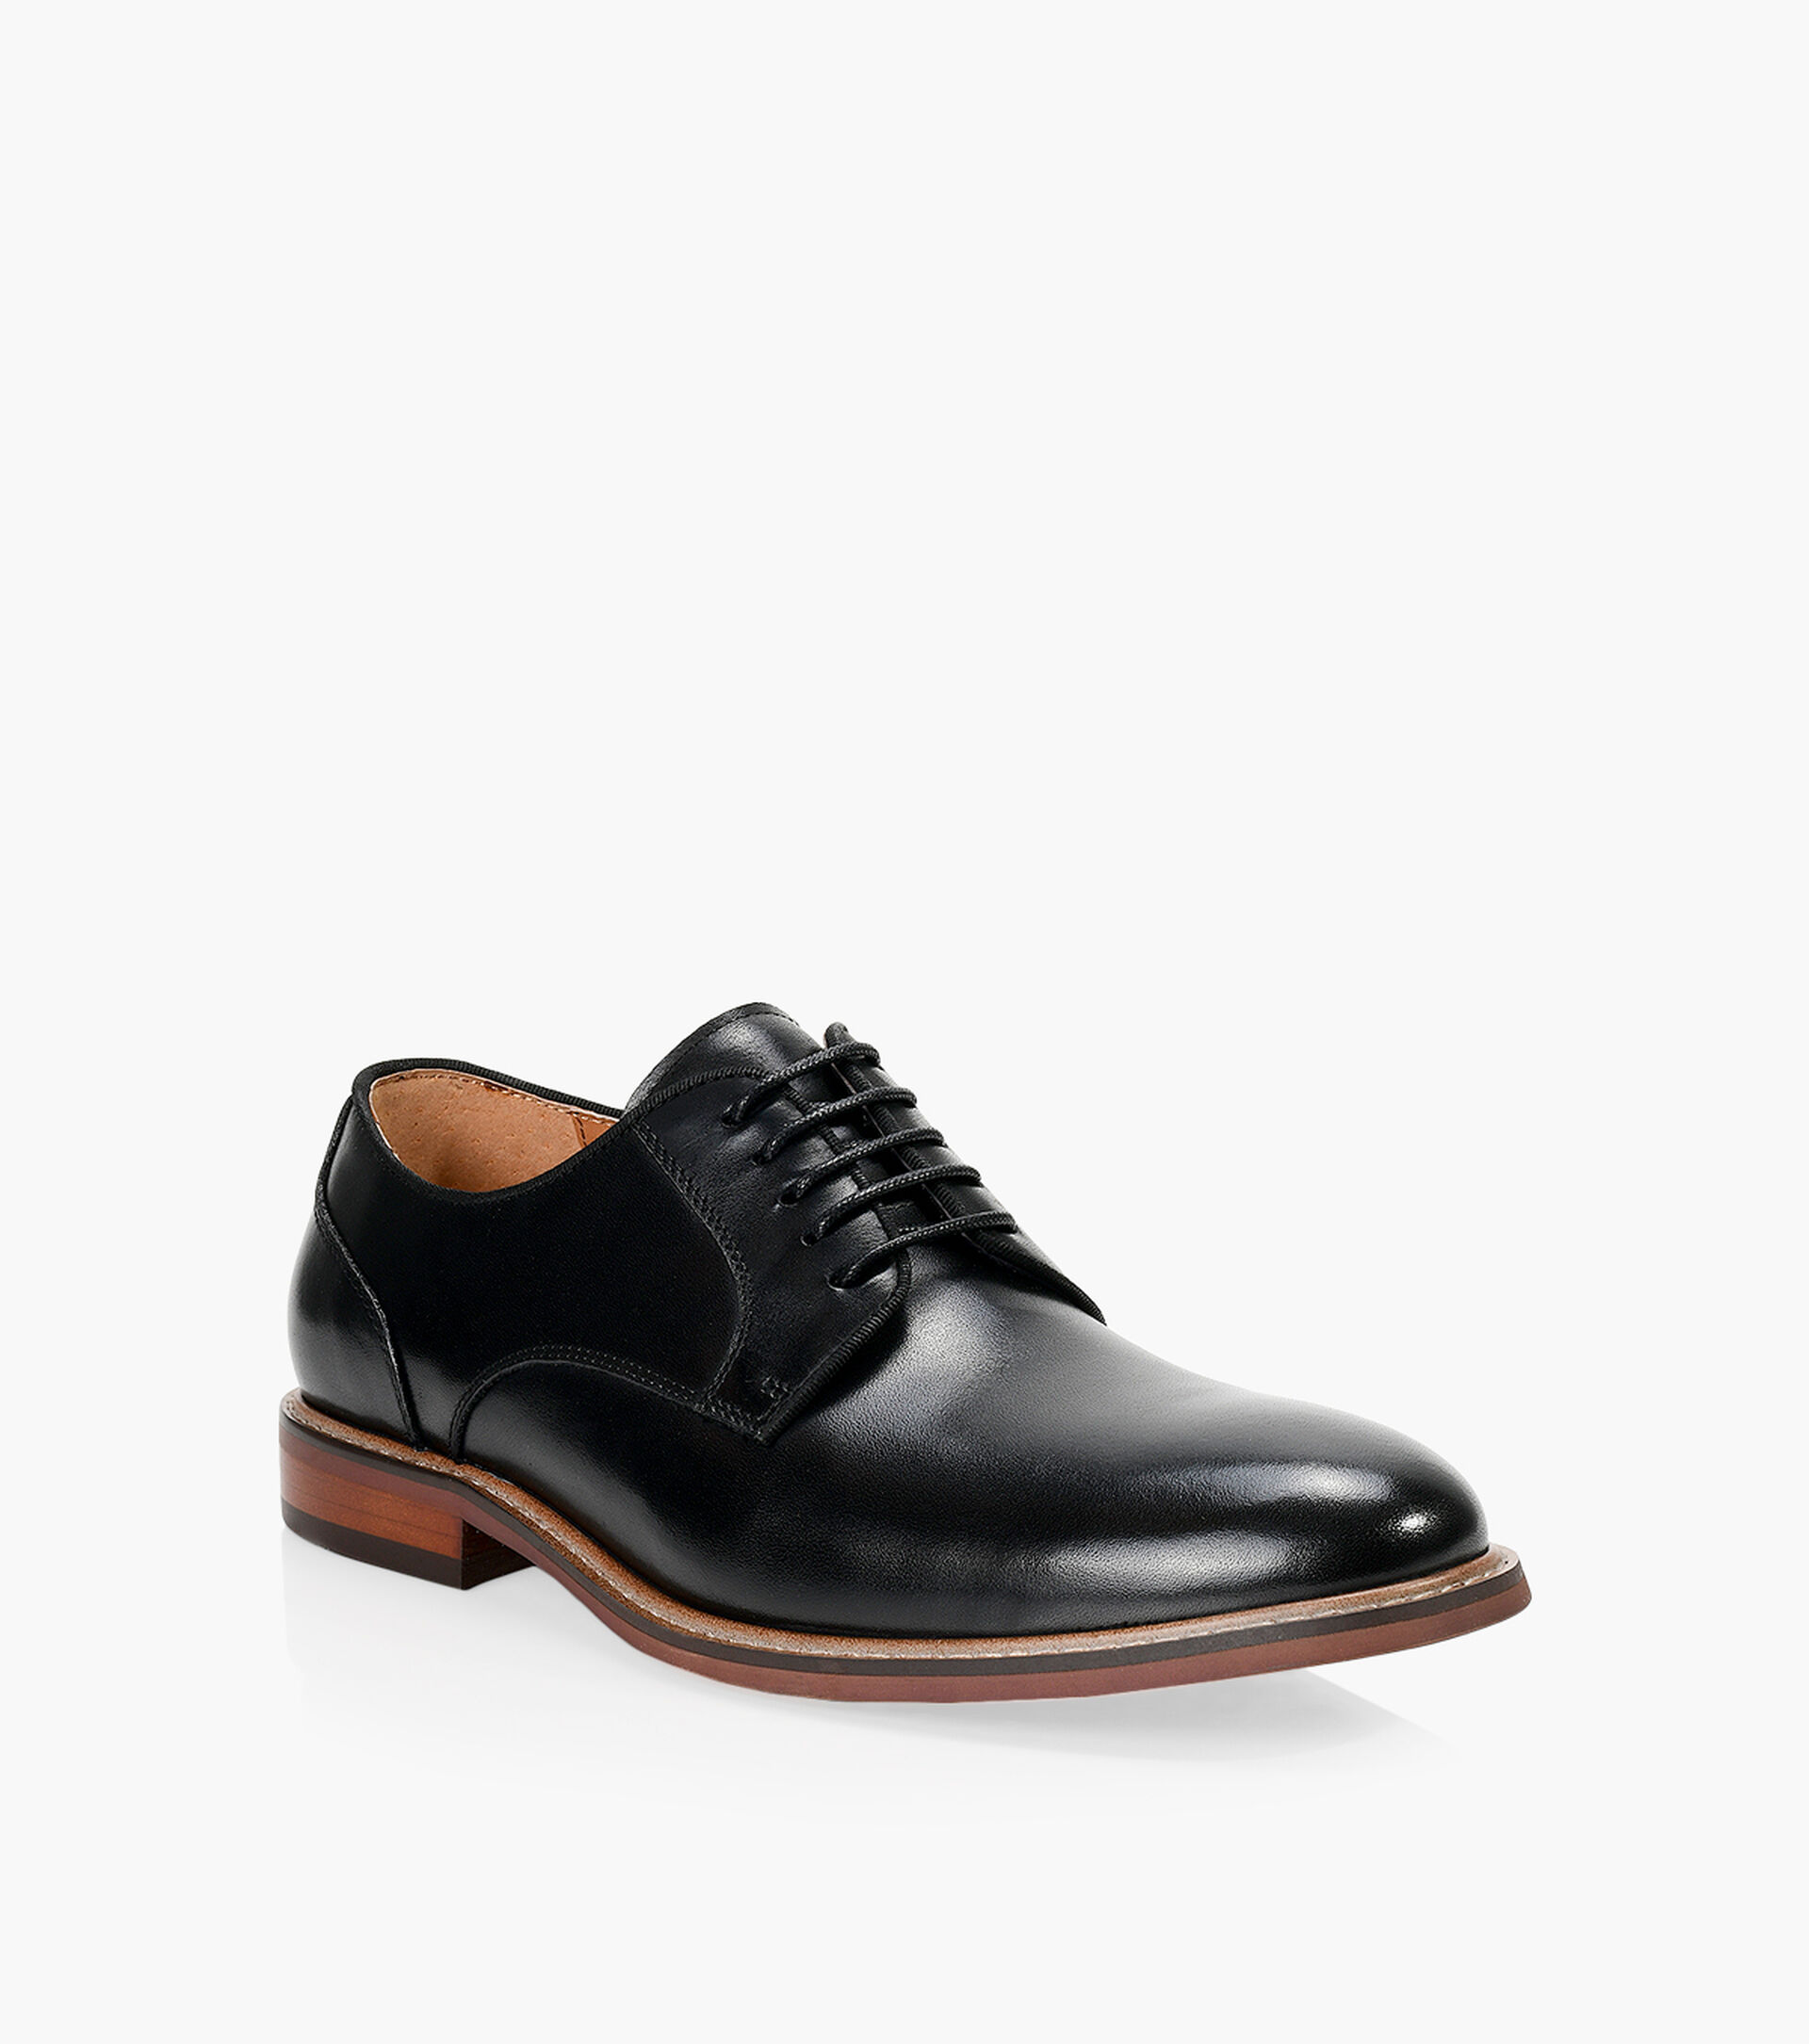 BROWNS WALTON - Cuir Verni | Browns Shoes